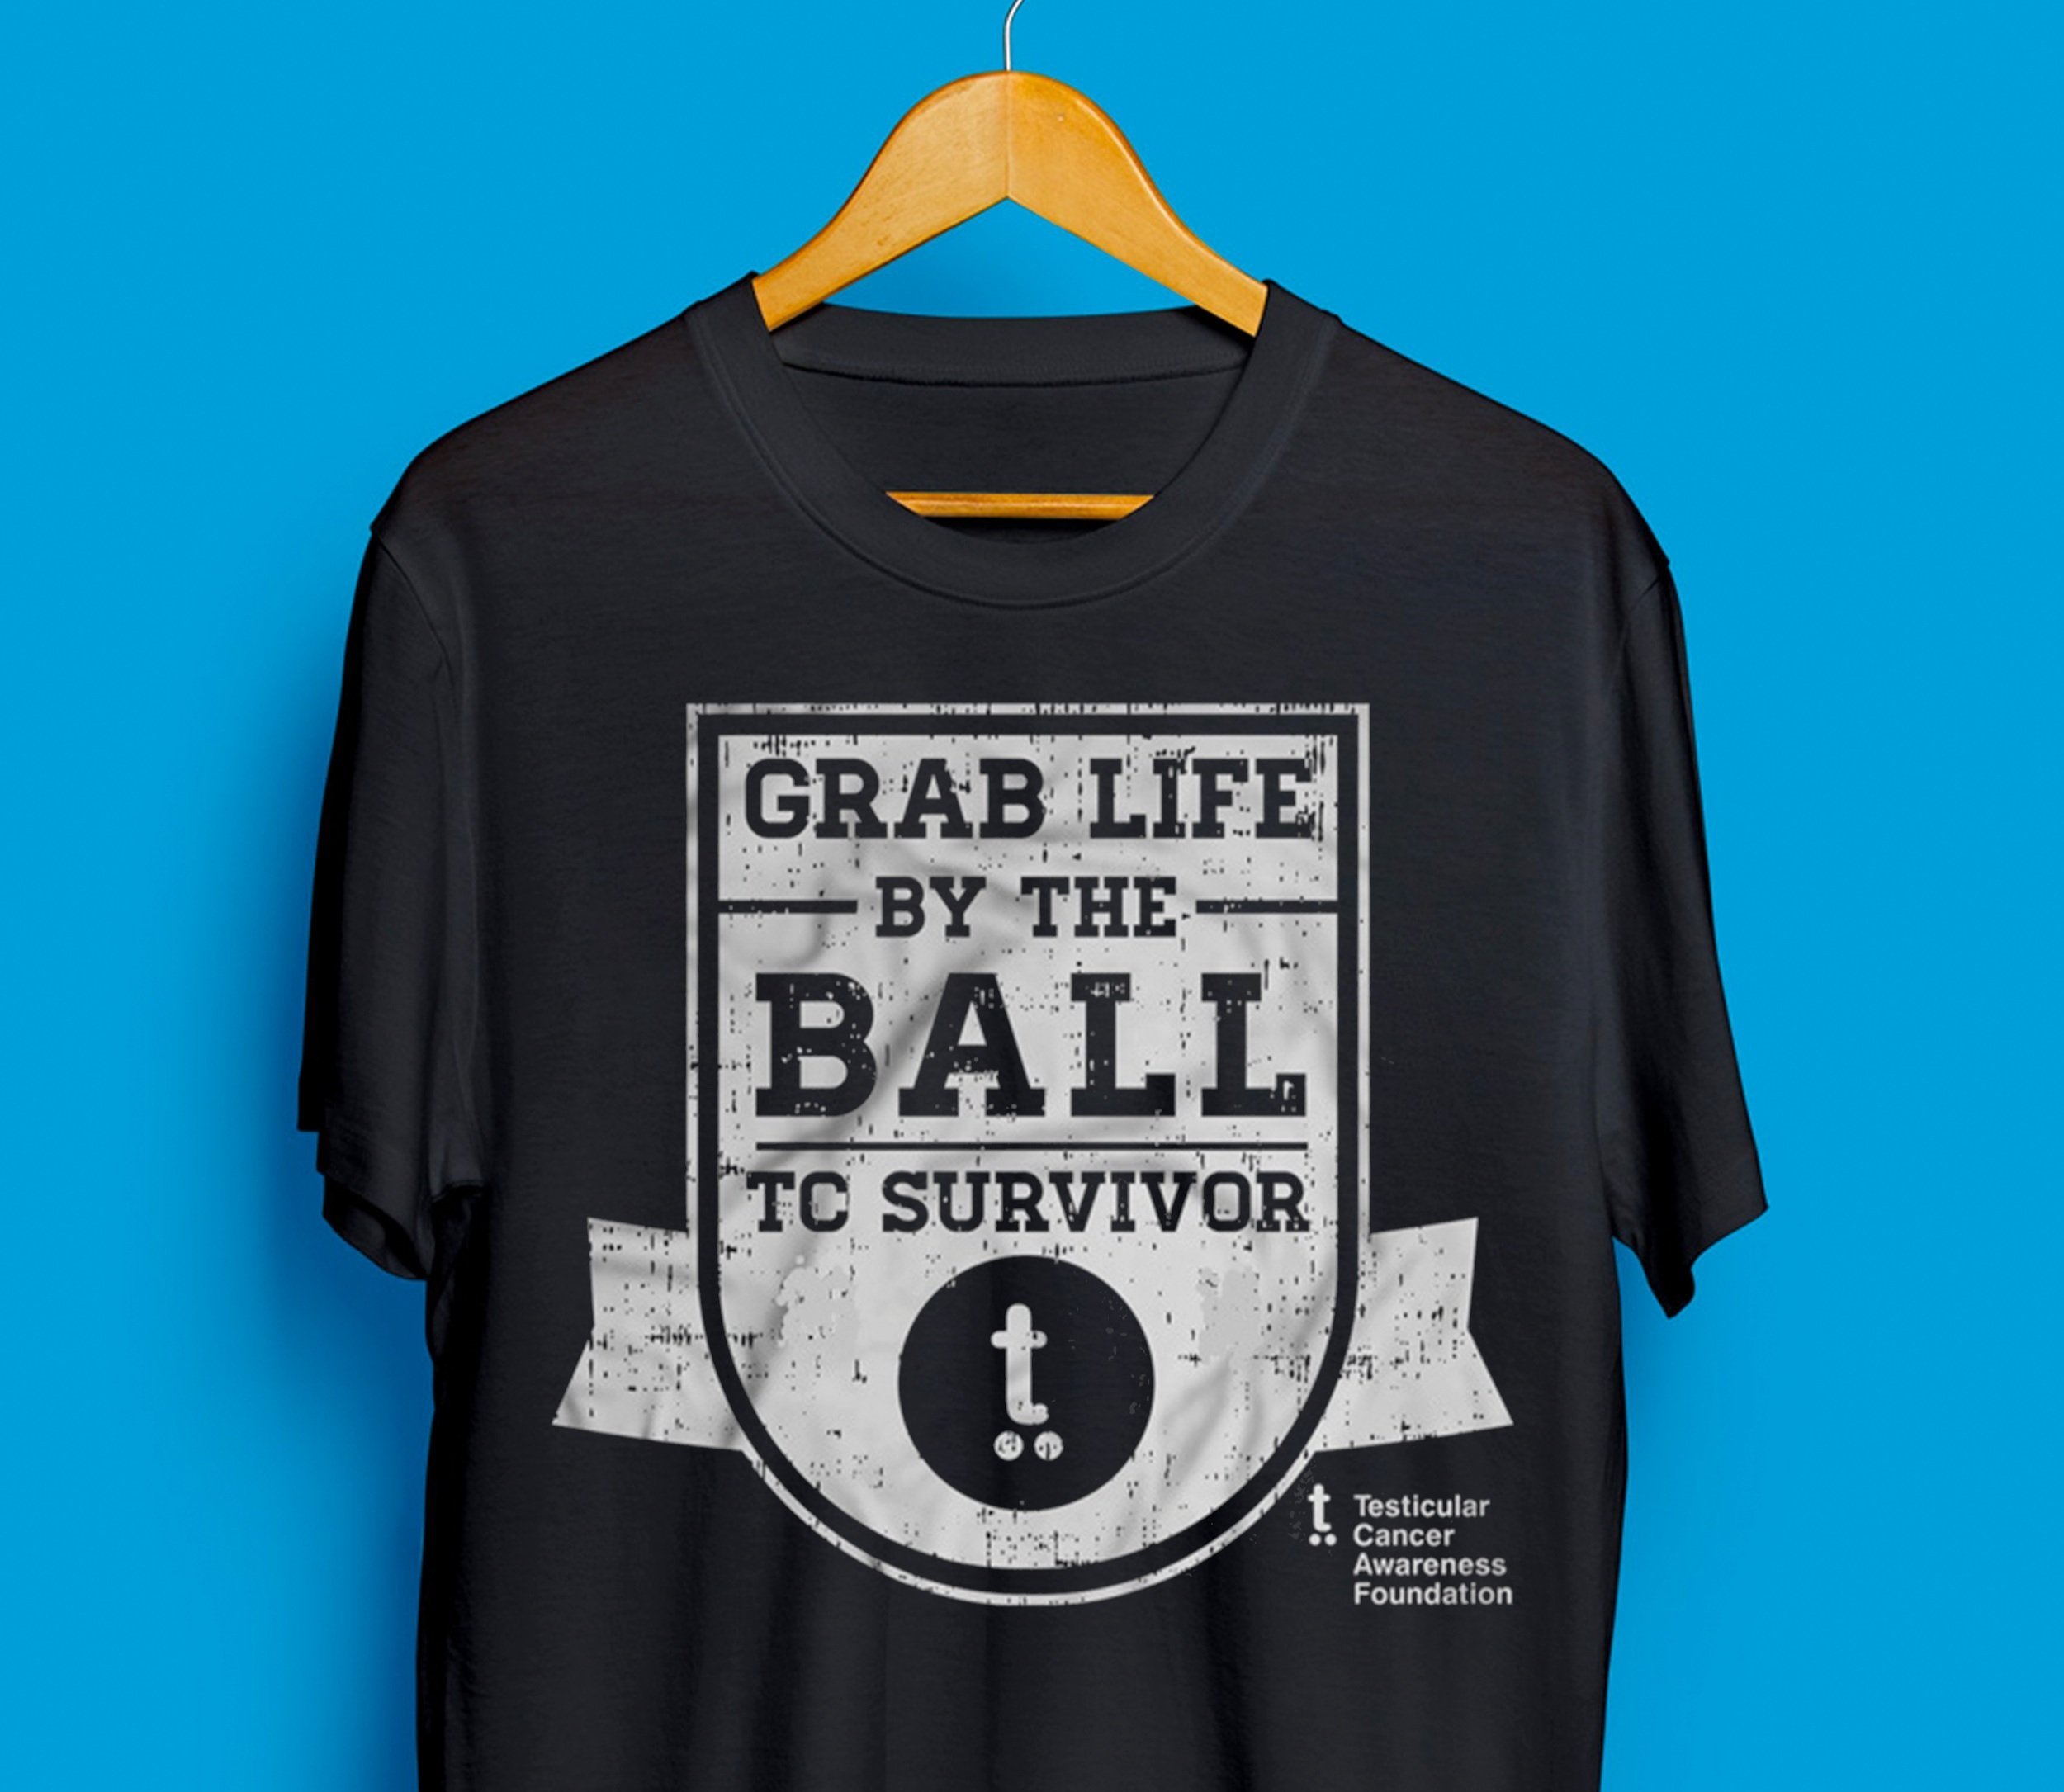 Grab life by the ball t-shirt